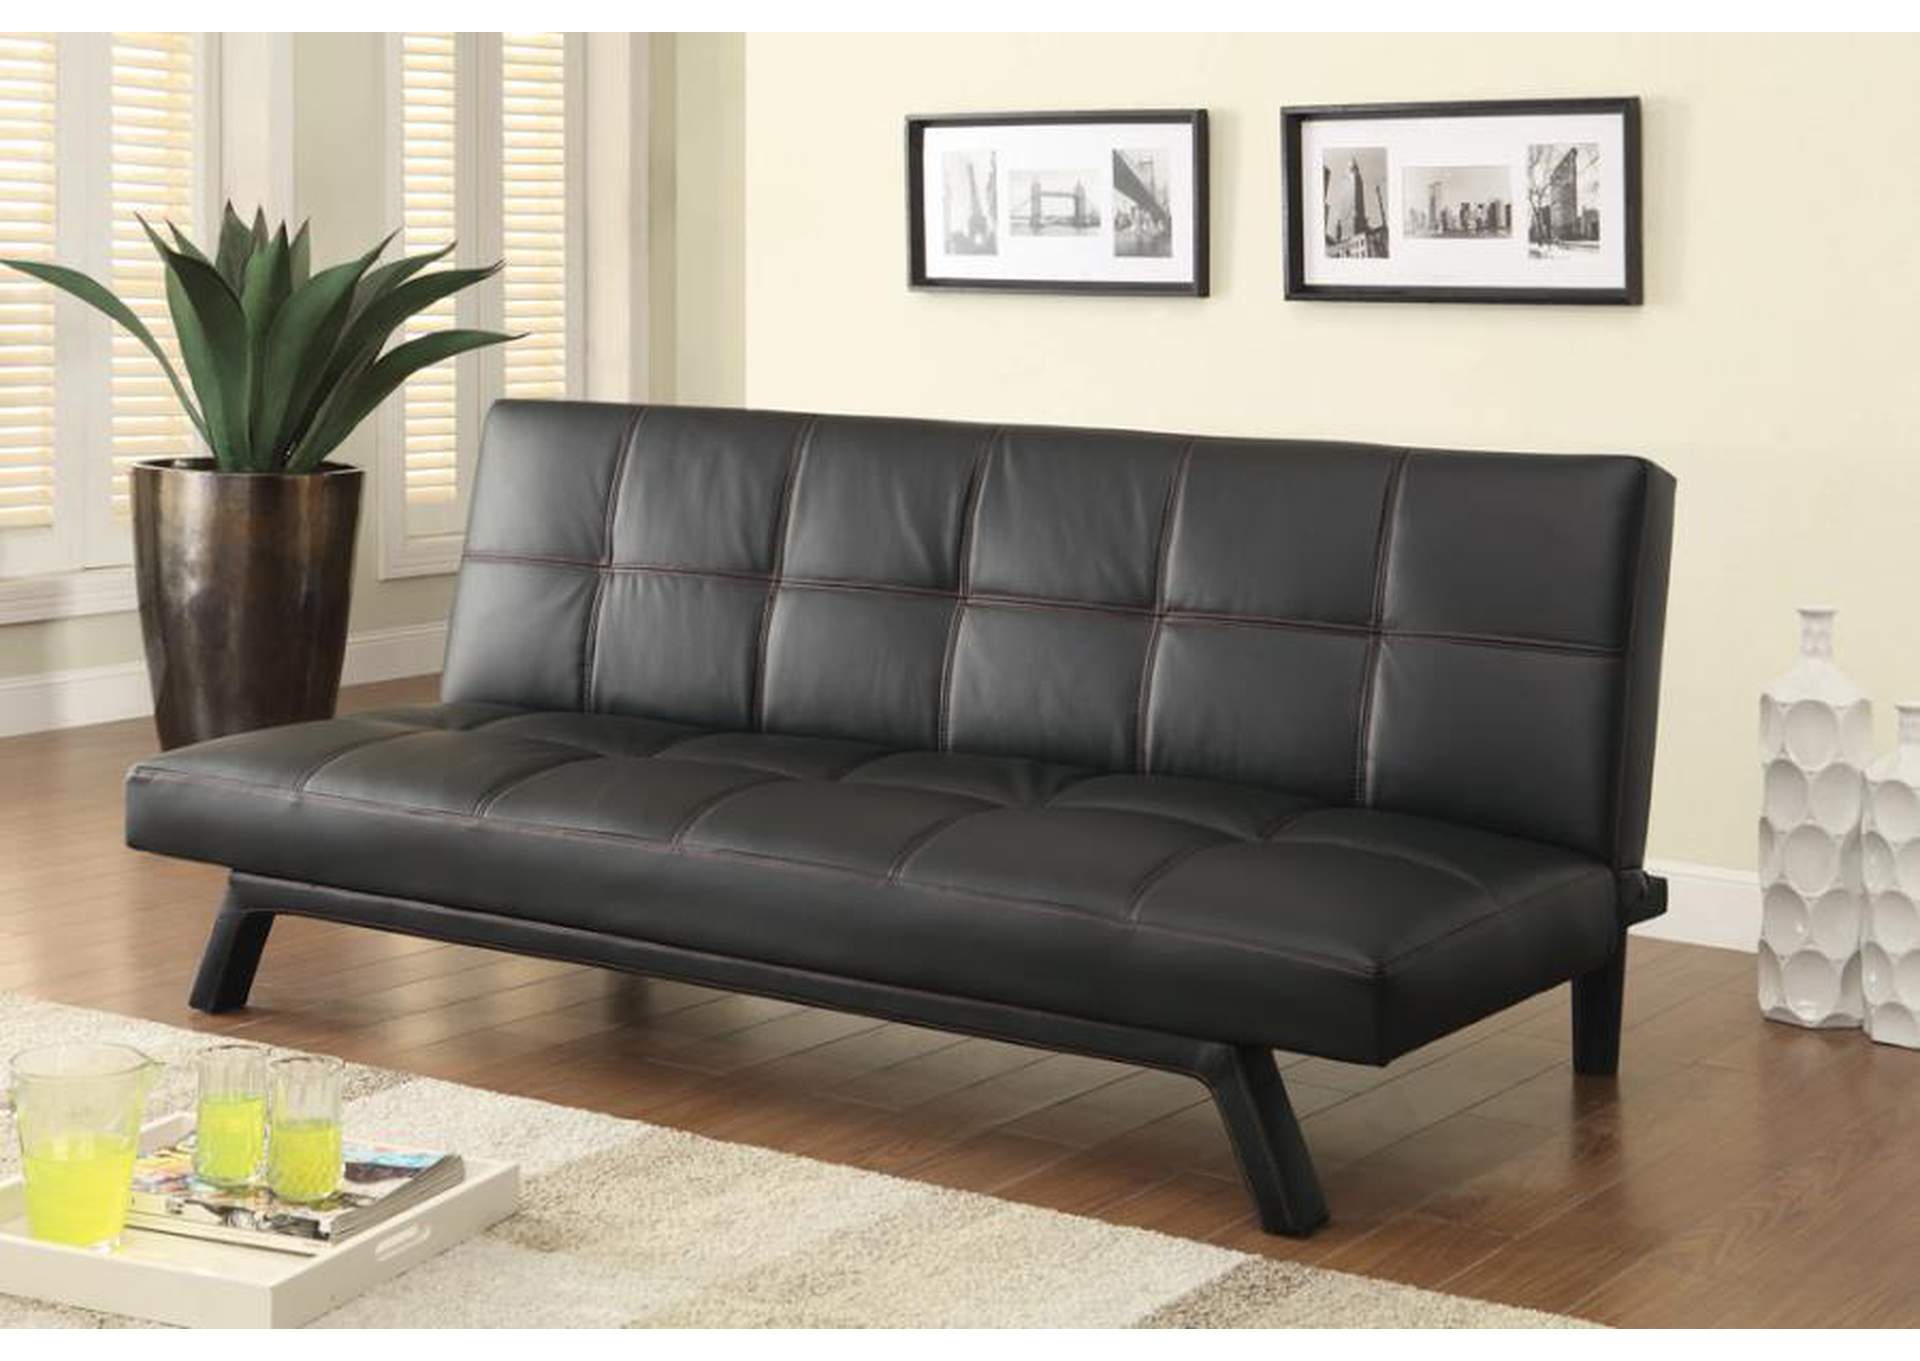 Corrie Biscuit-tufted Upholstered Sofa Bed Black,Coaster Furniture